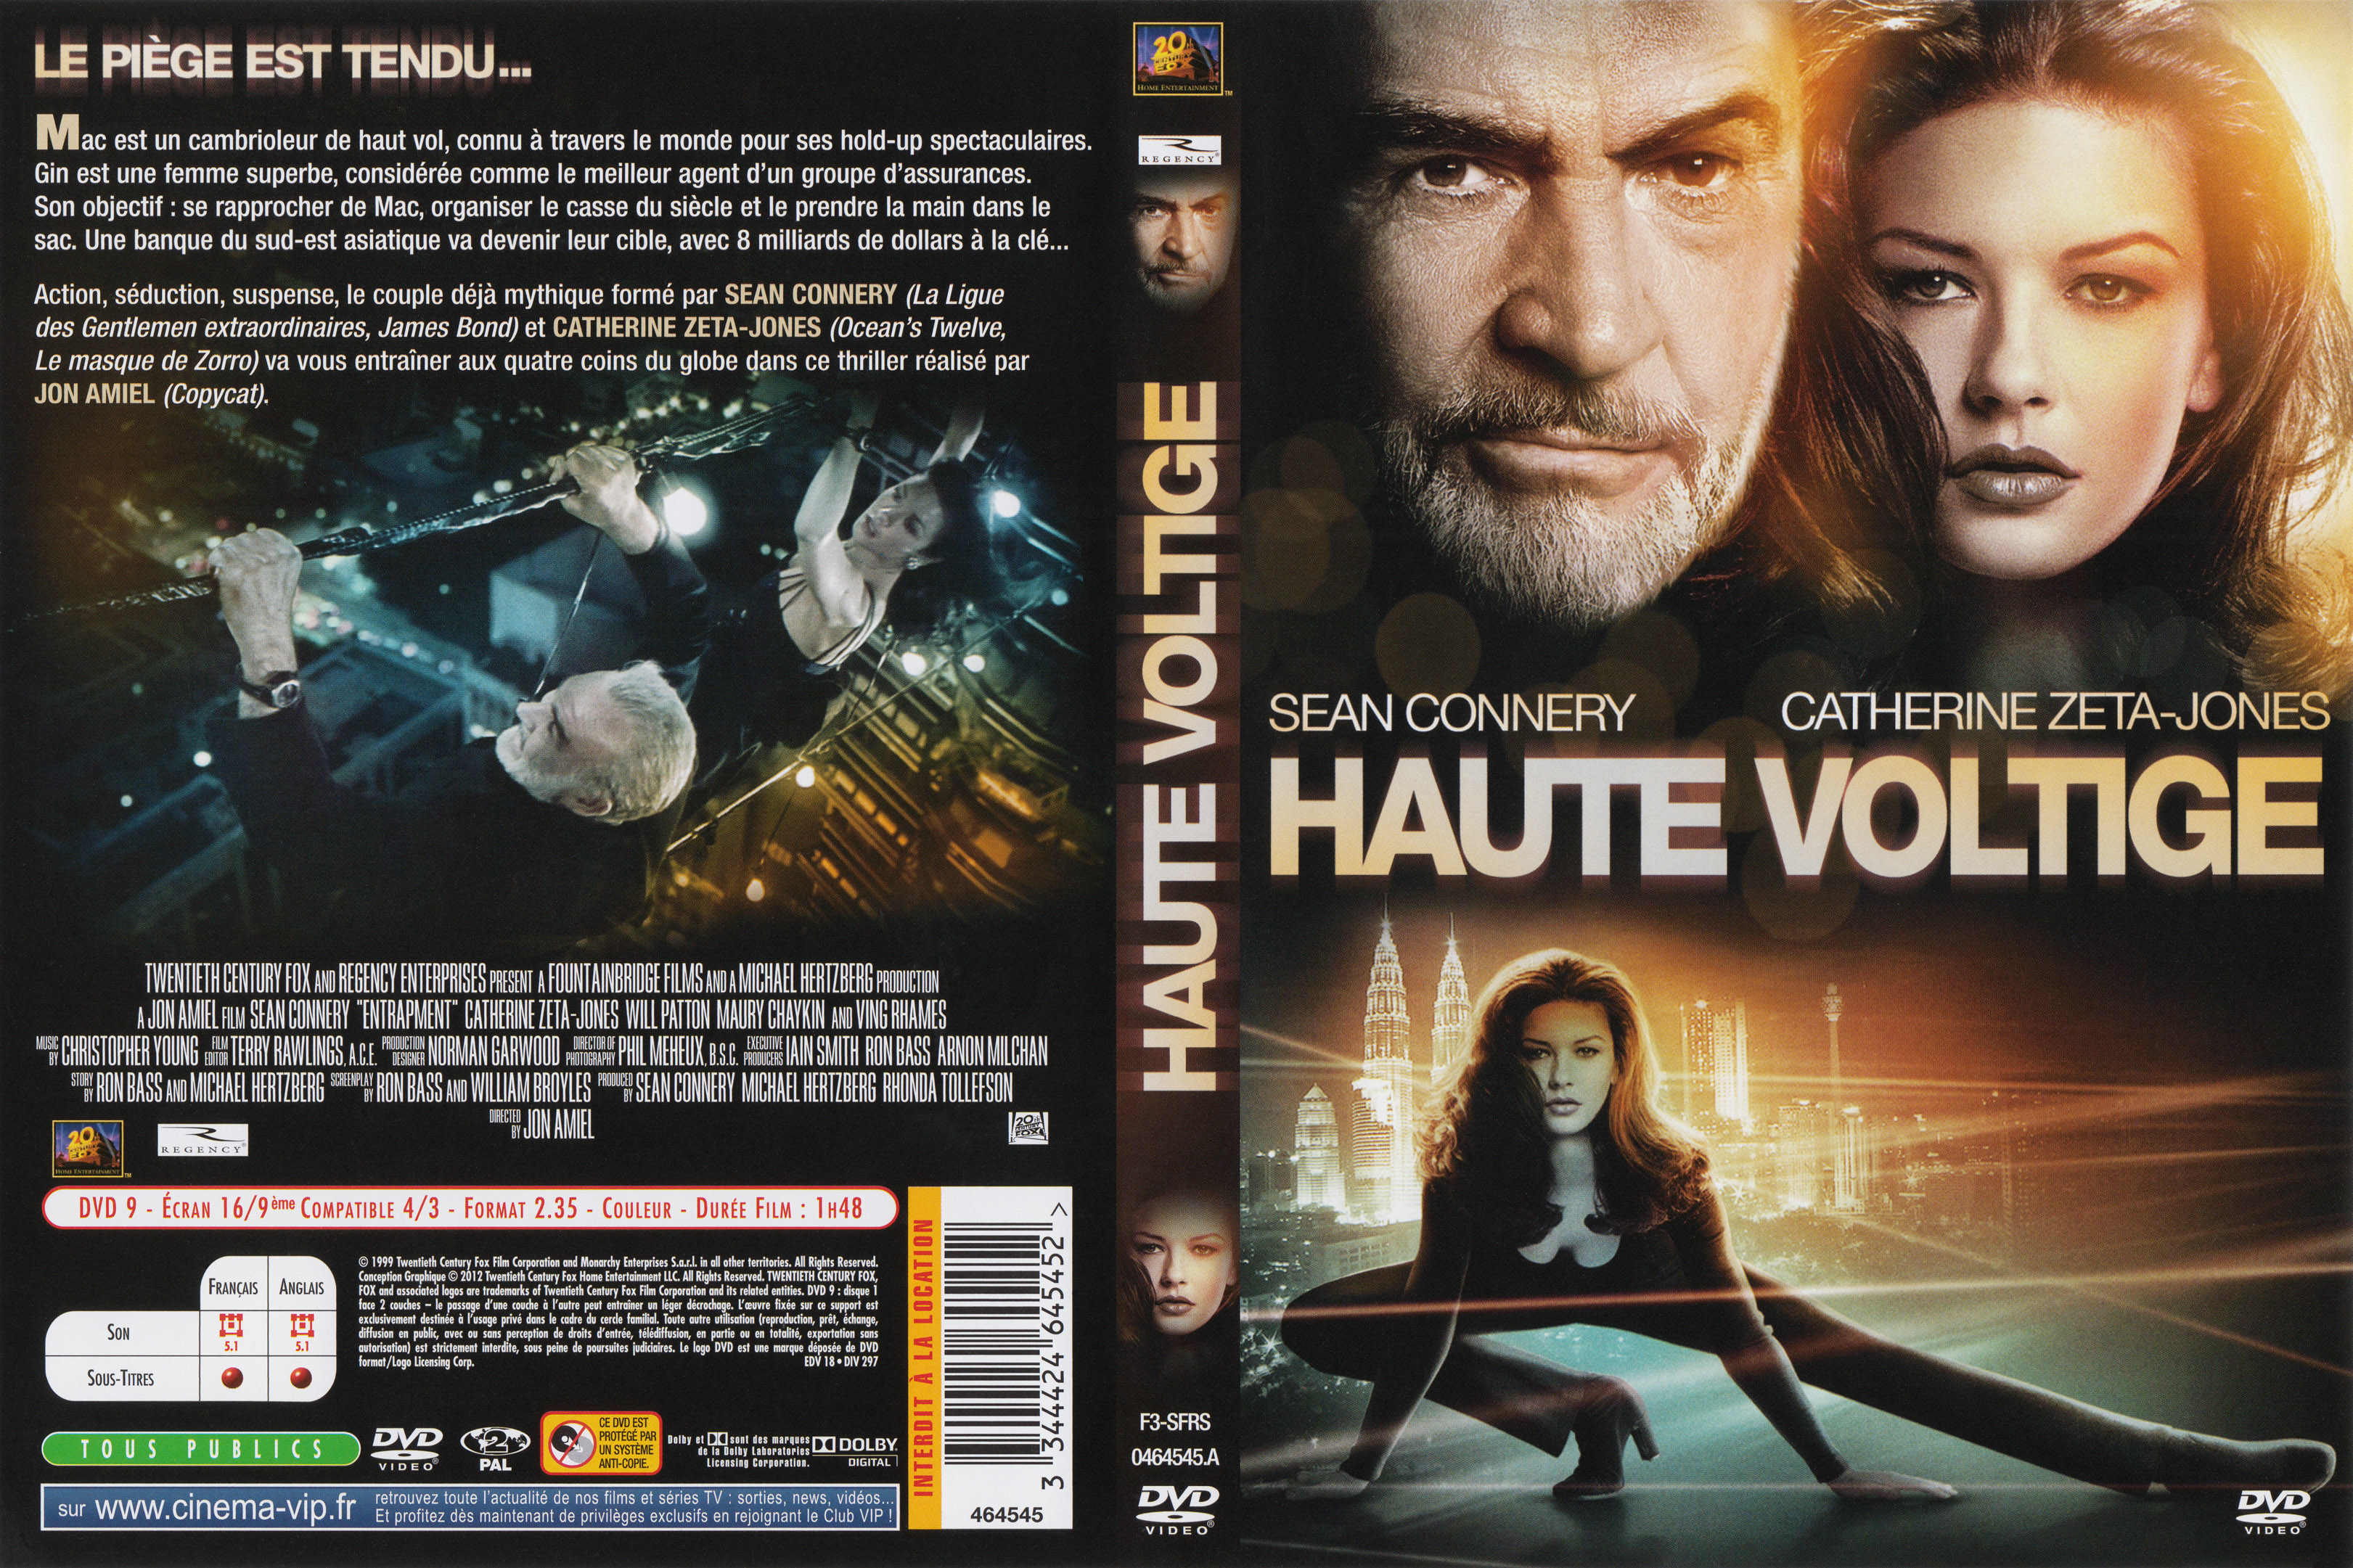 Jaquette DVD Haute voltige v4